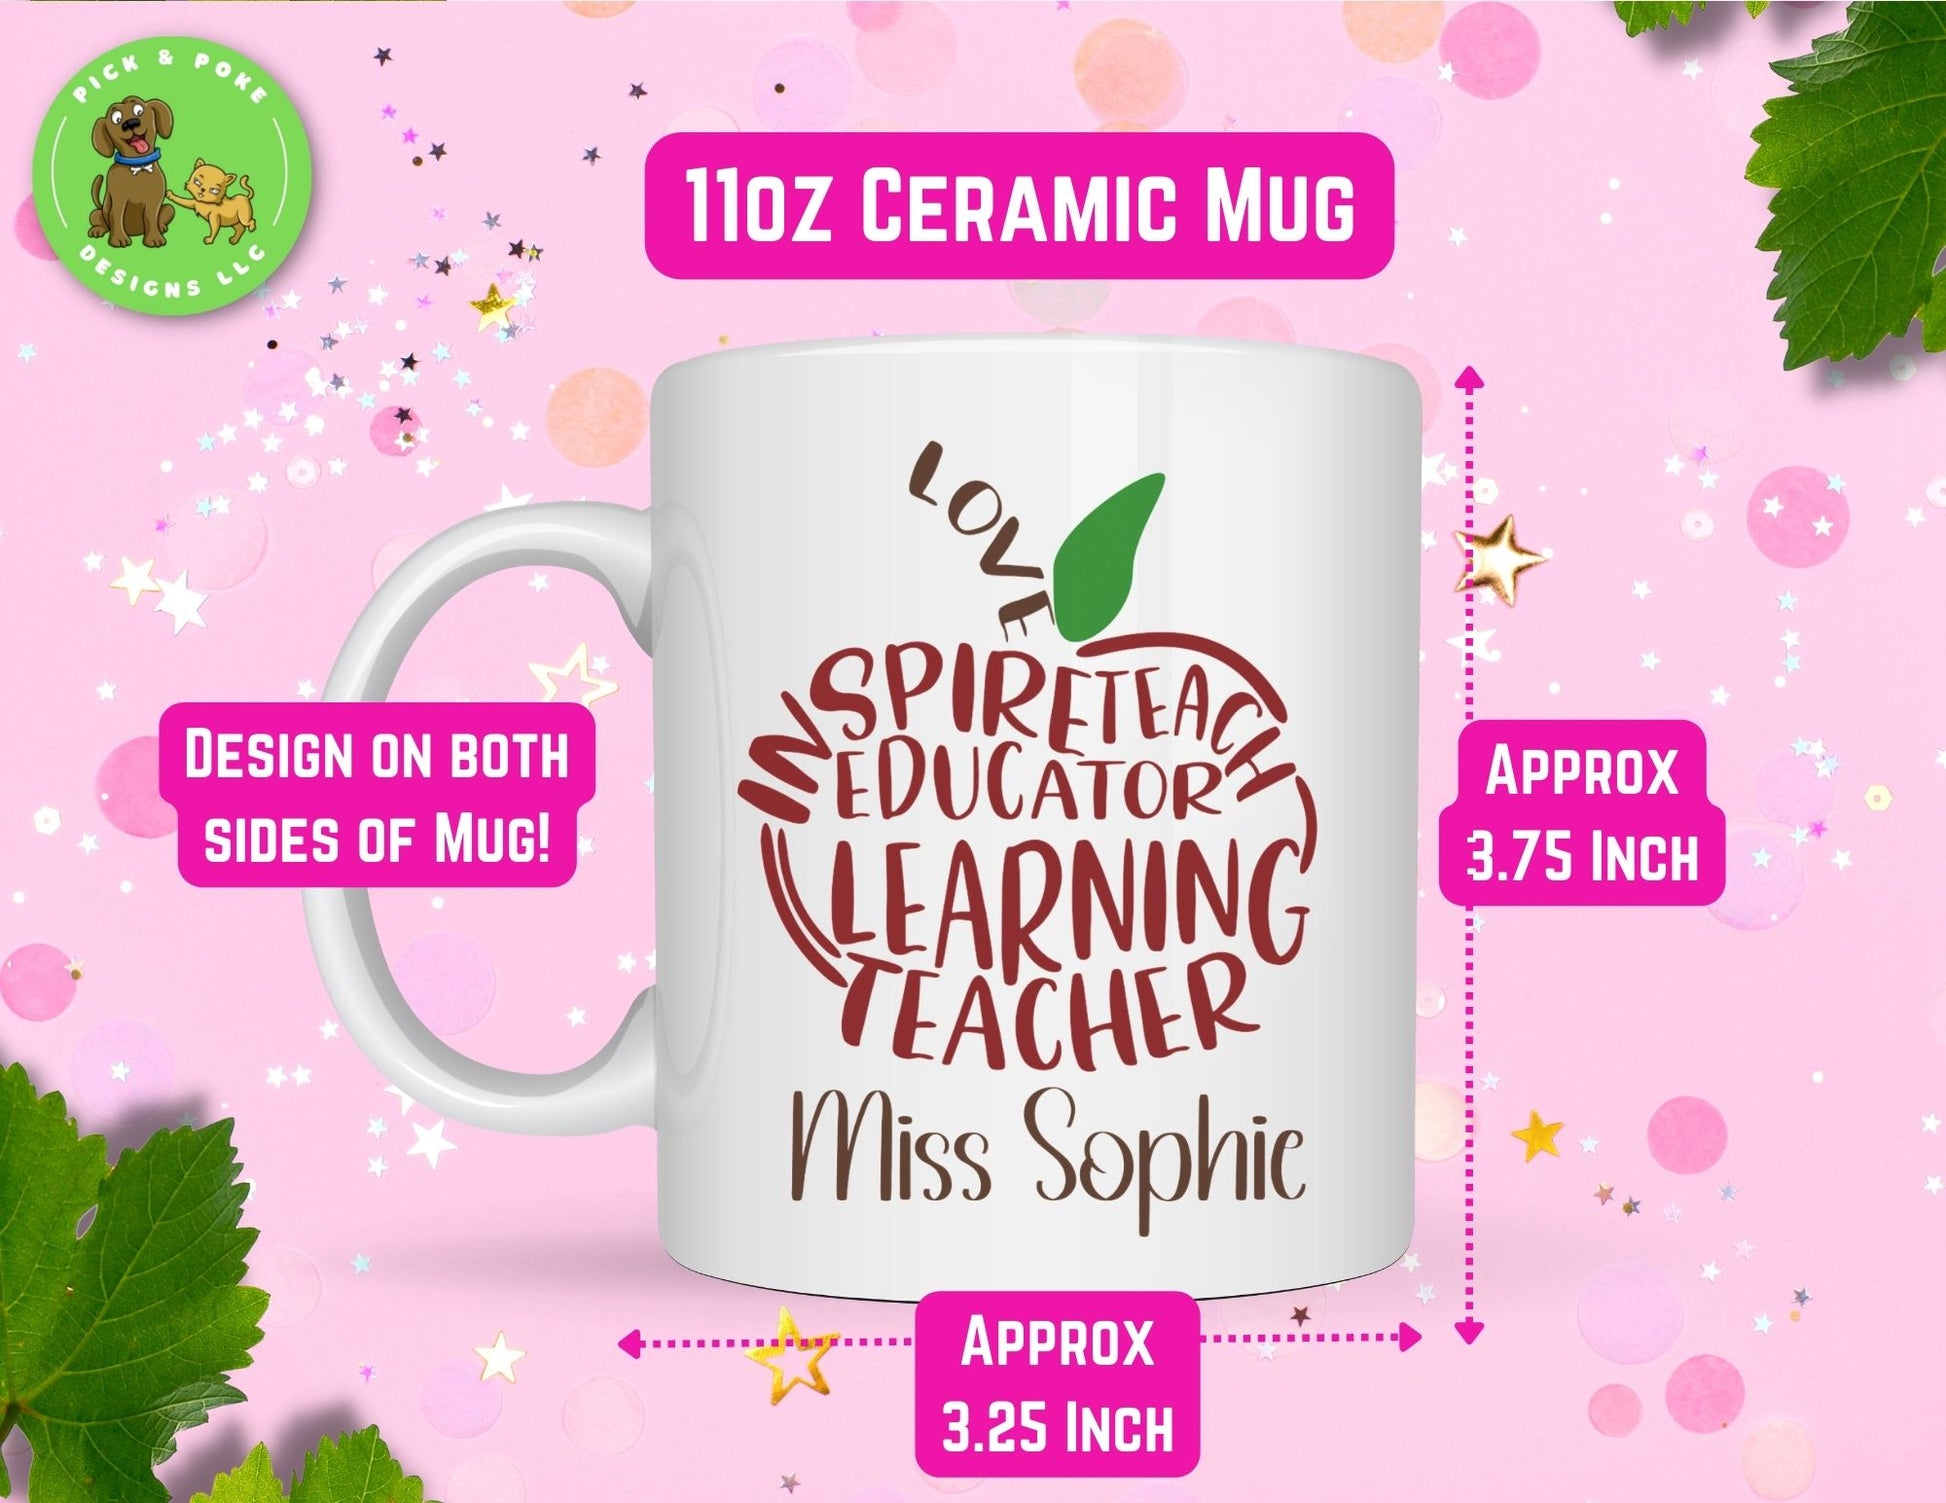 The apple teacher design and name are printed on both sides of the 11oz teacher mug